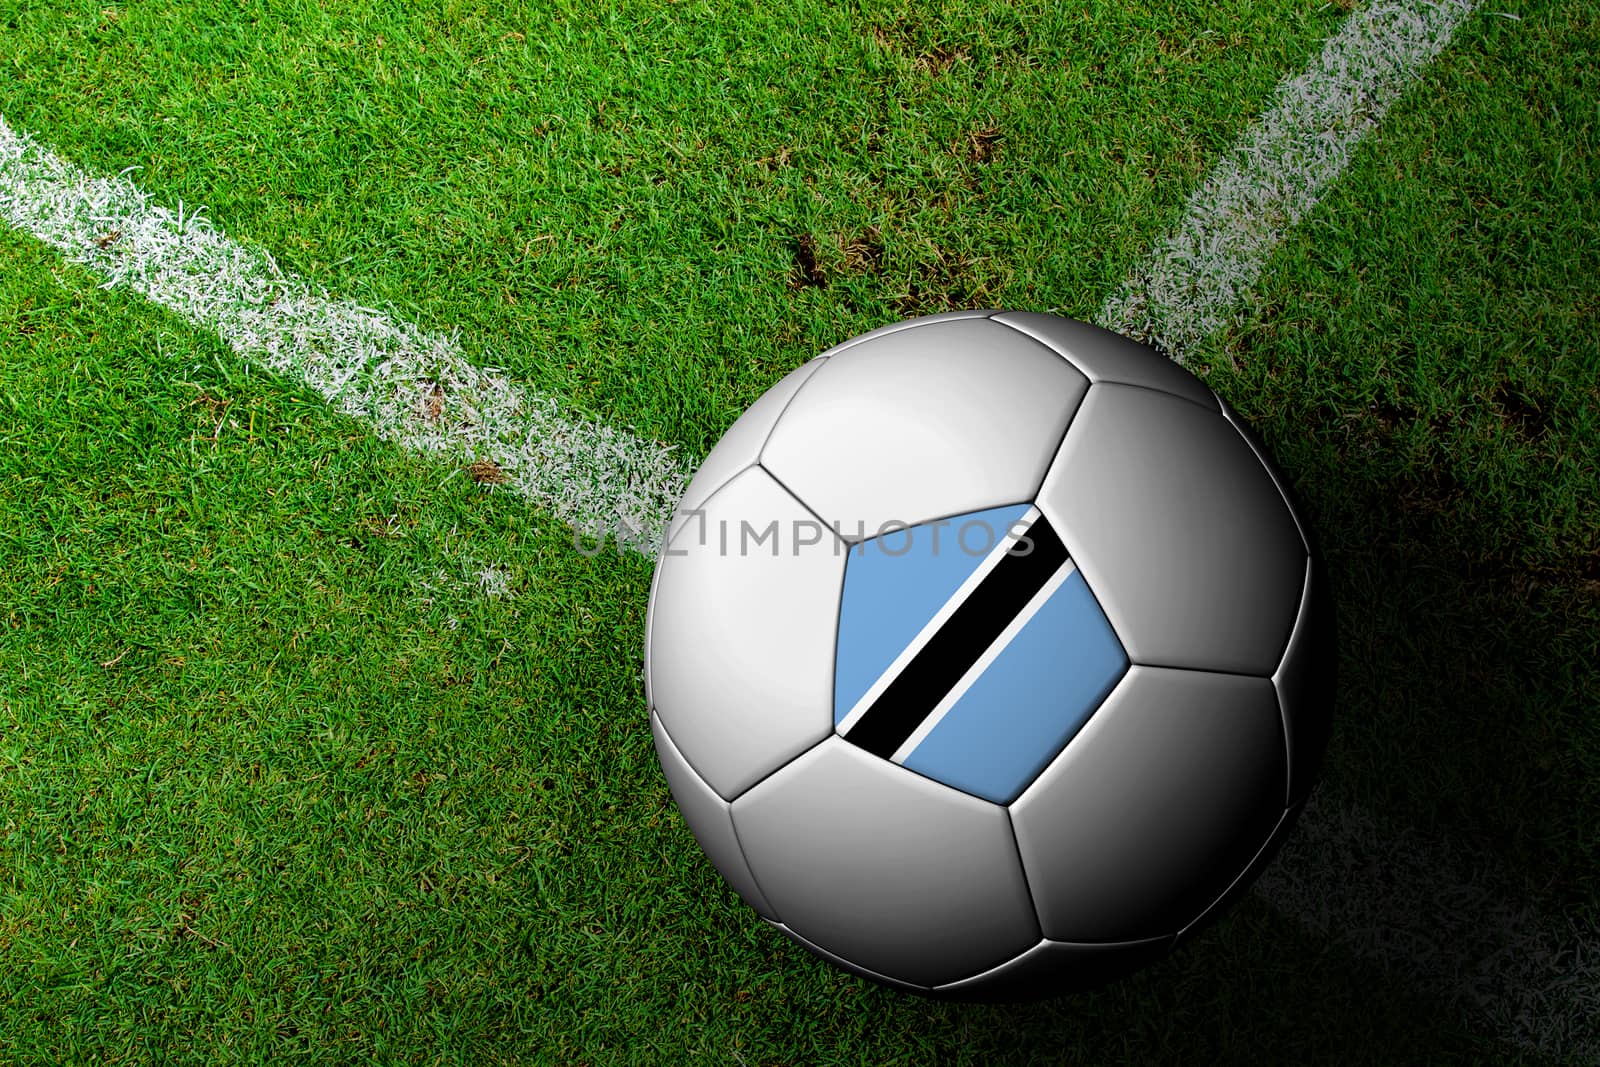 Botswana Flag Pattern of a soccer ball in green grass by jakgree